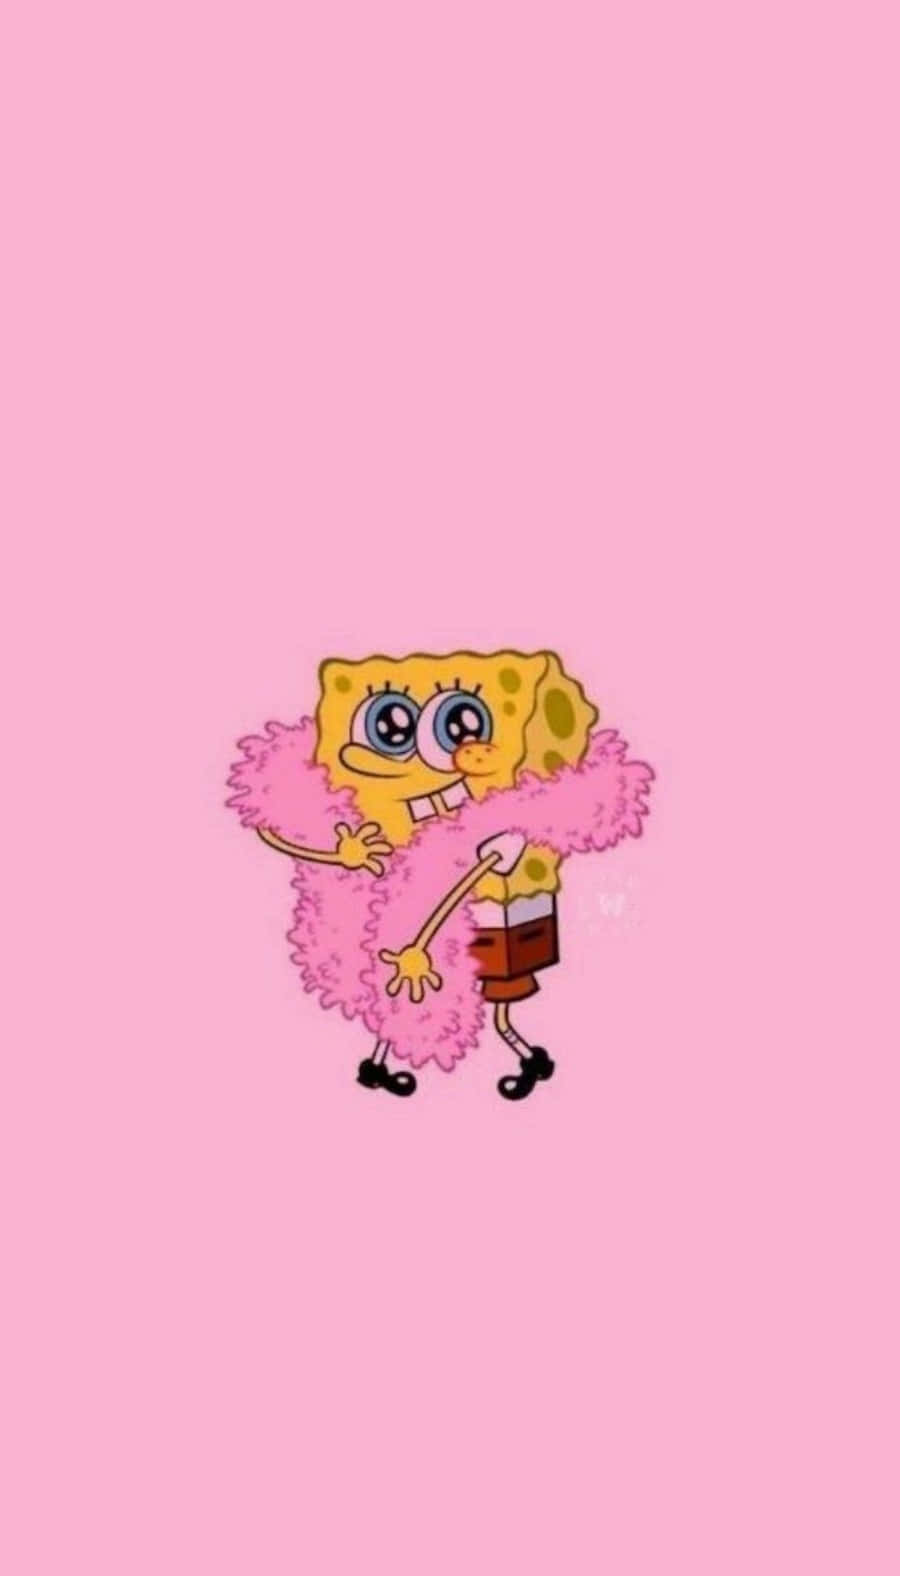 Spongebob In Pink Scarf Girly Tumblr Wallpaper